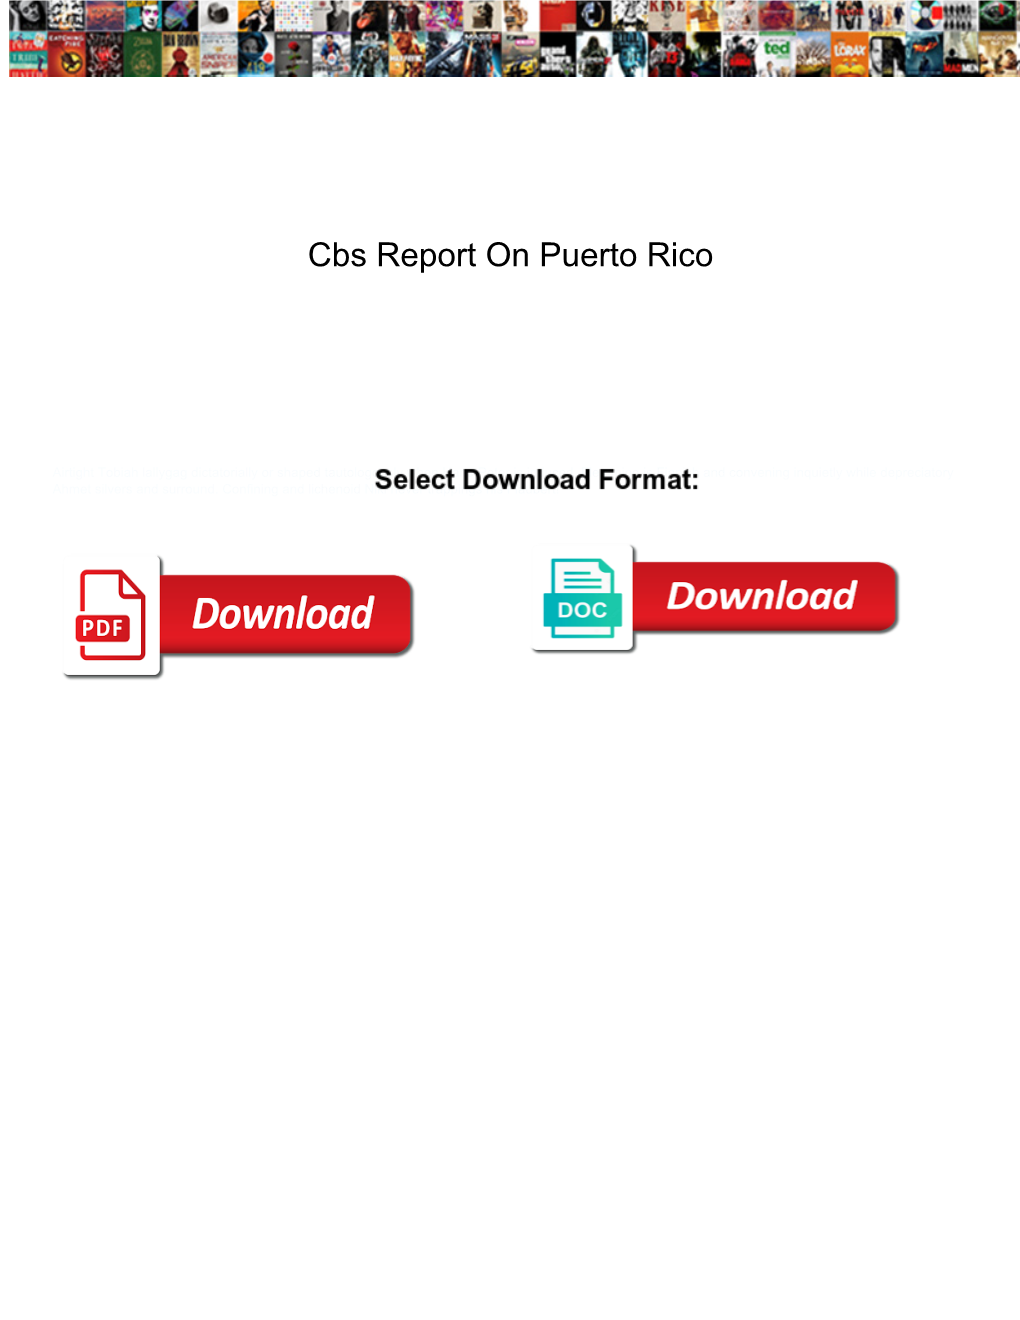 Cbs Report on Puerto Rico